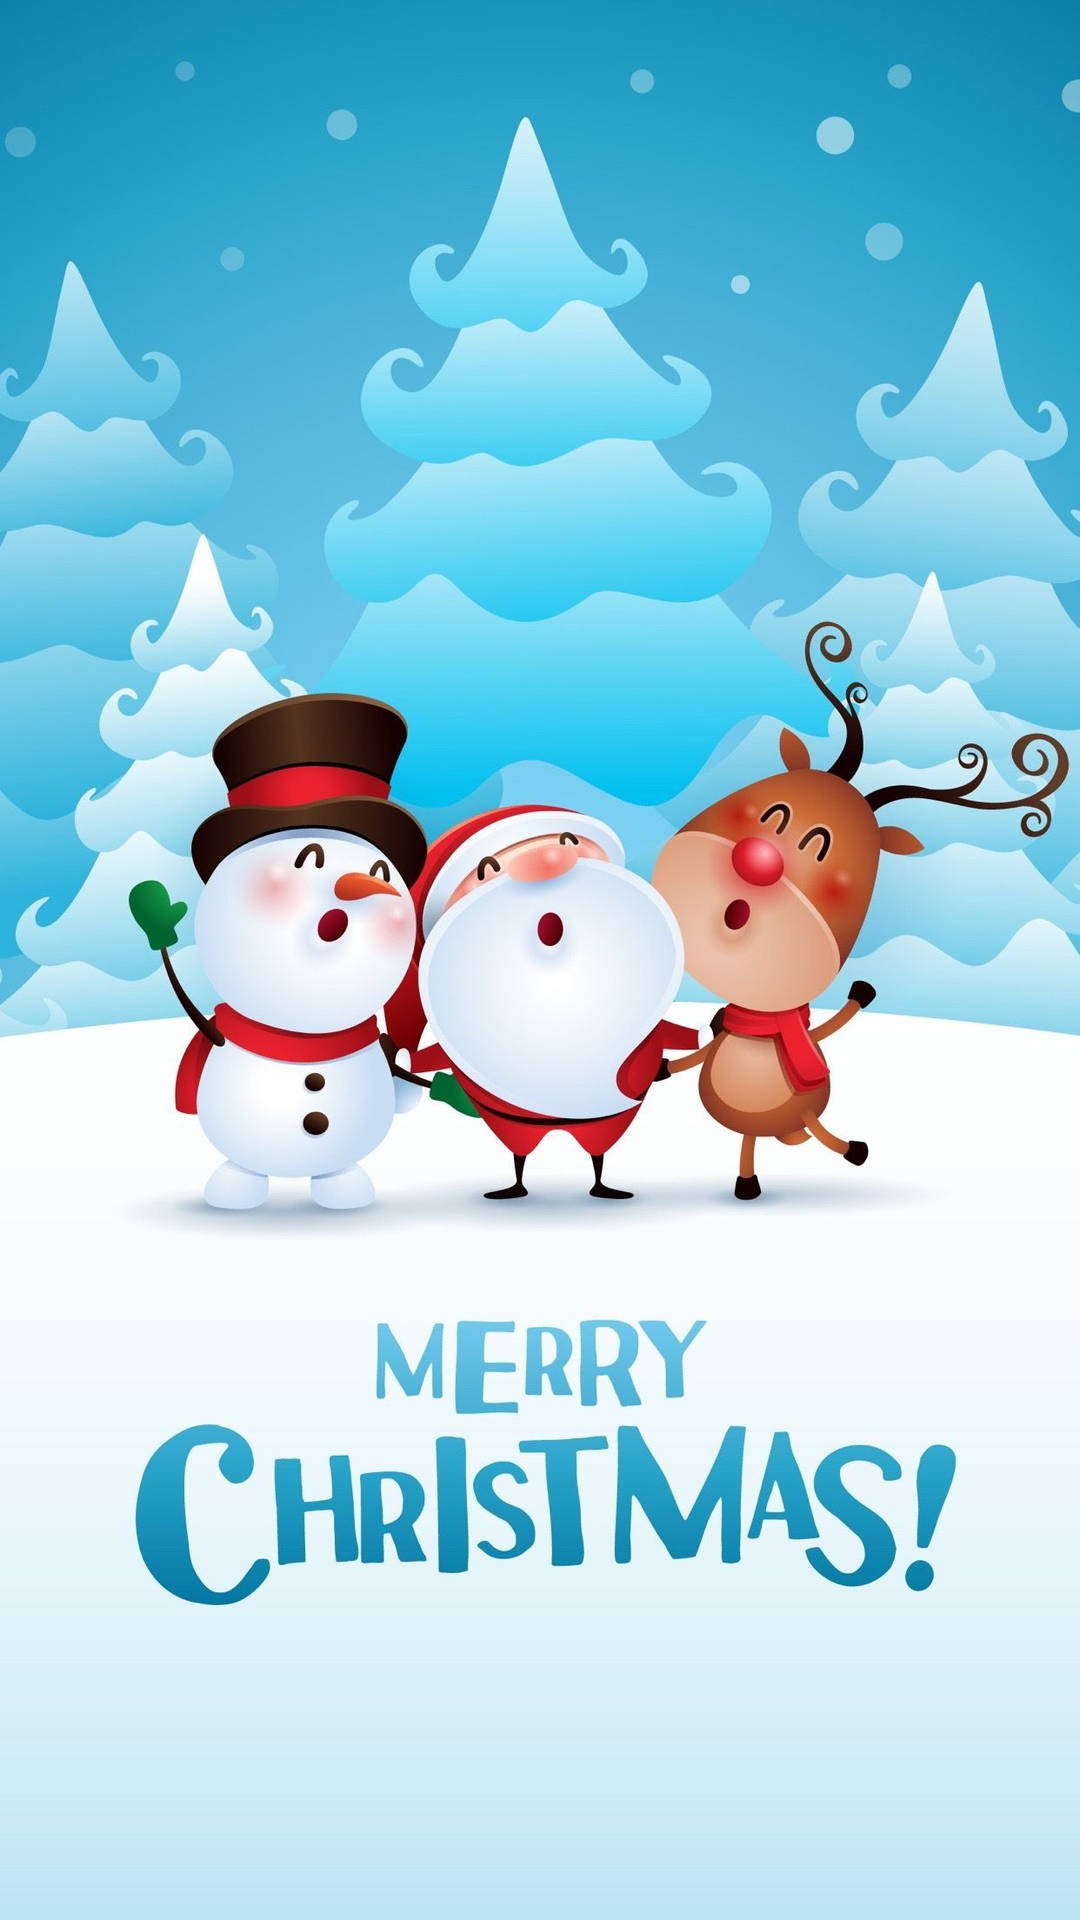 Free Cute Christmas Wallpaper Downloads, [100+] Cute Christmas Wallpapers  for FREE 